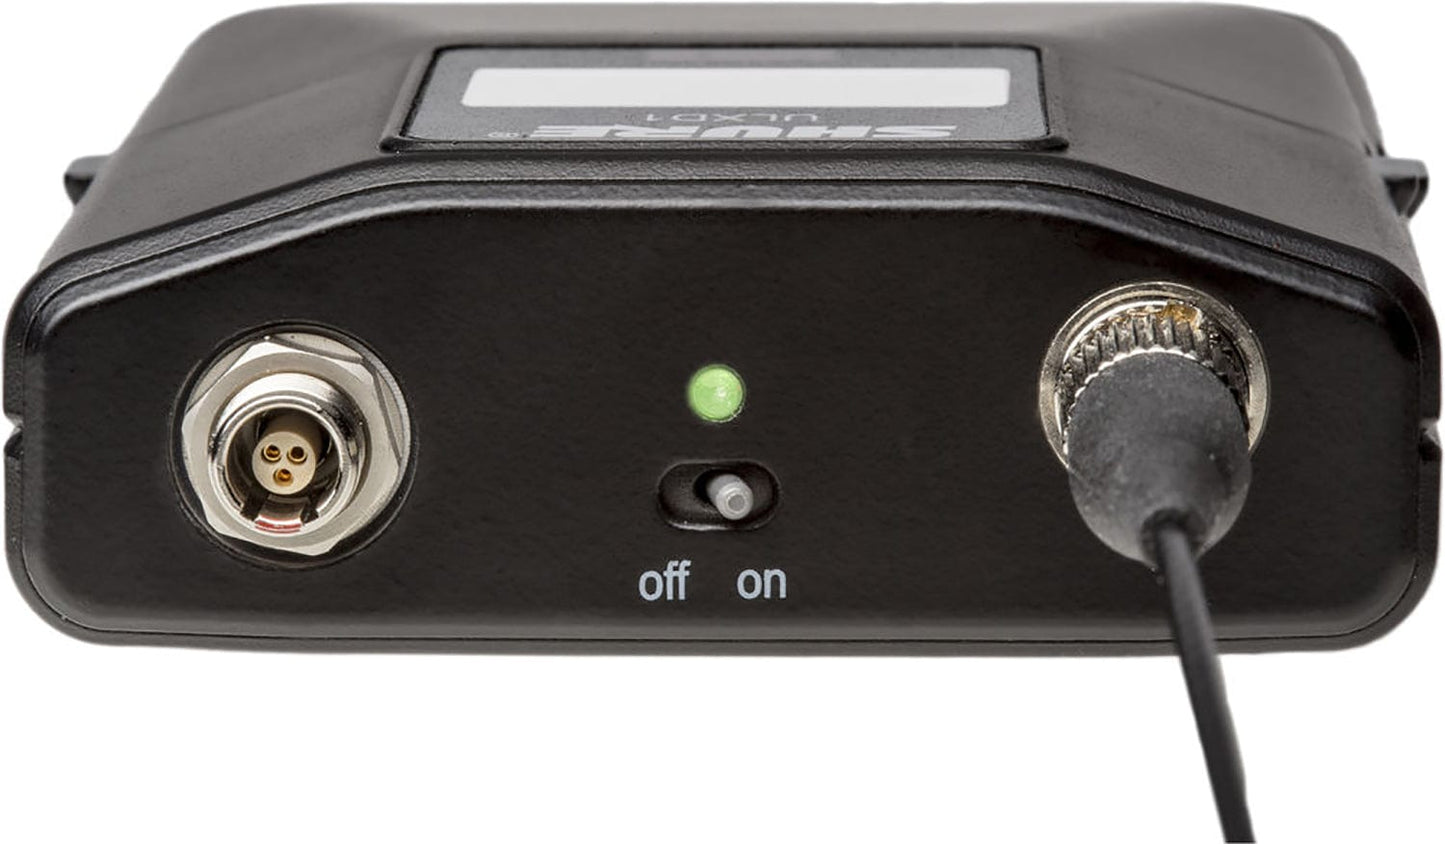 Shure ULXD1LEMO3 Digital Bodypack Transmitter, X52 Band - PSSL ProSound and Stage Lighting